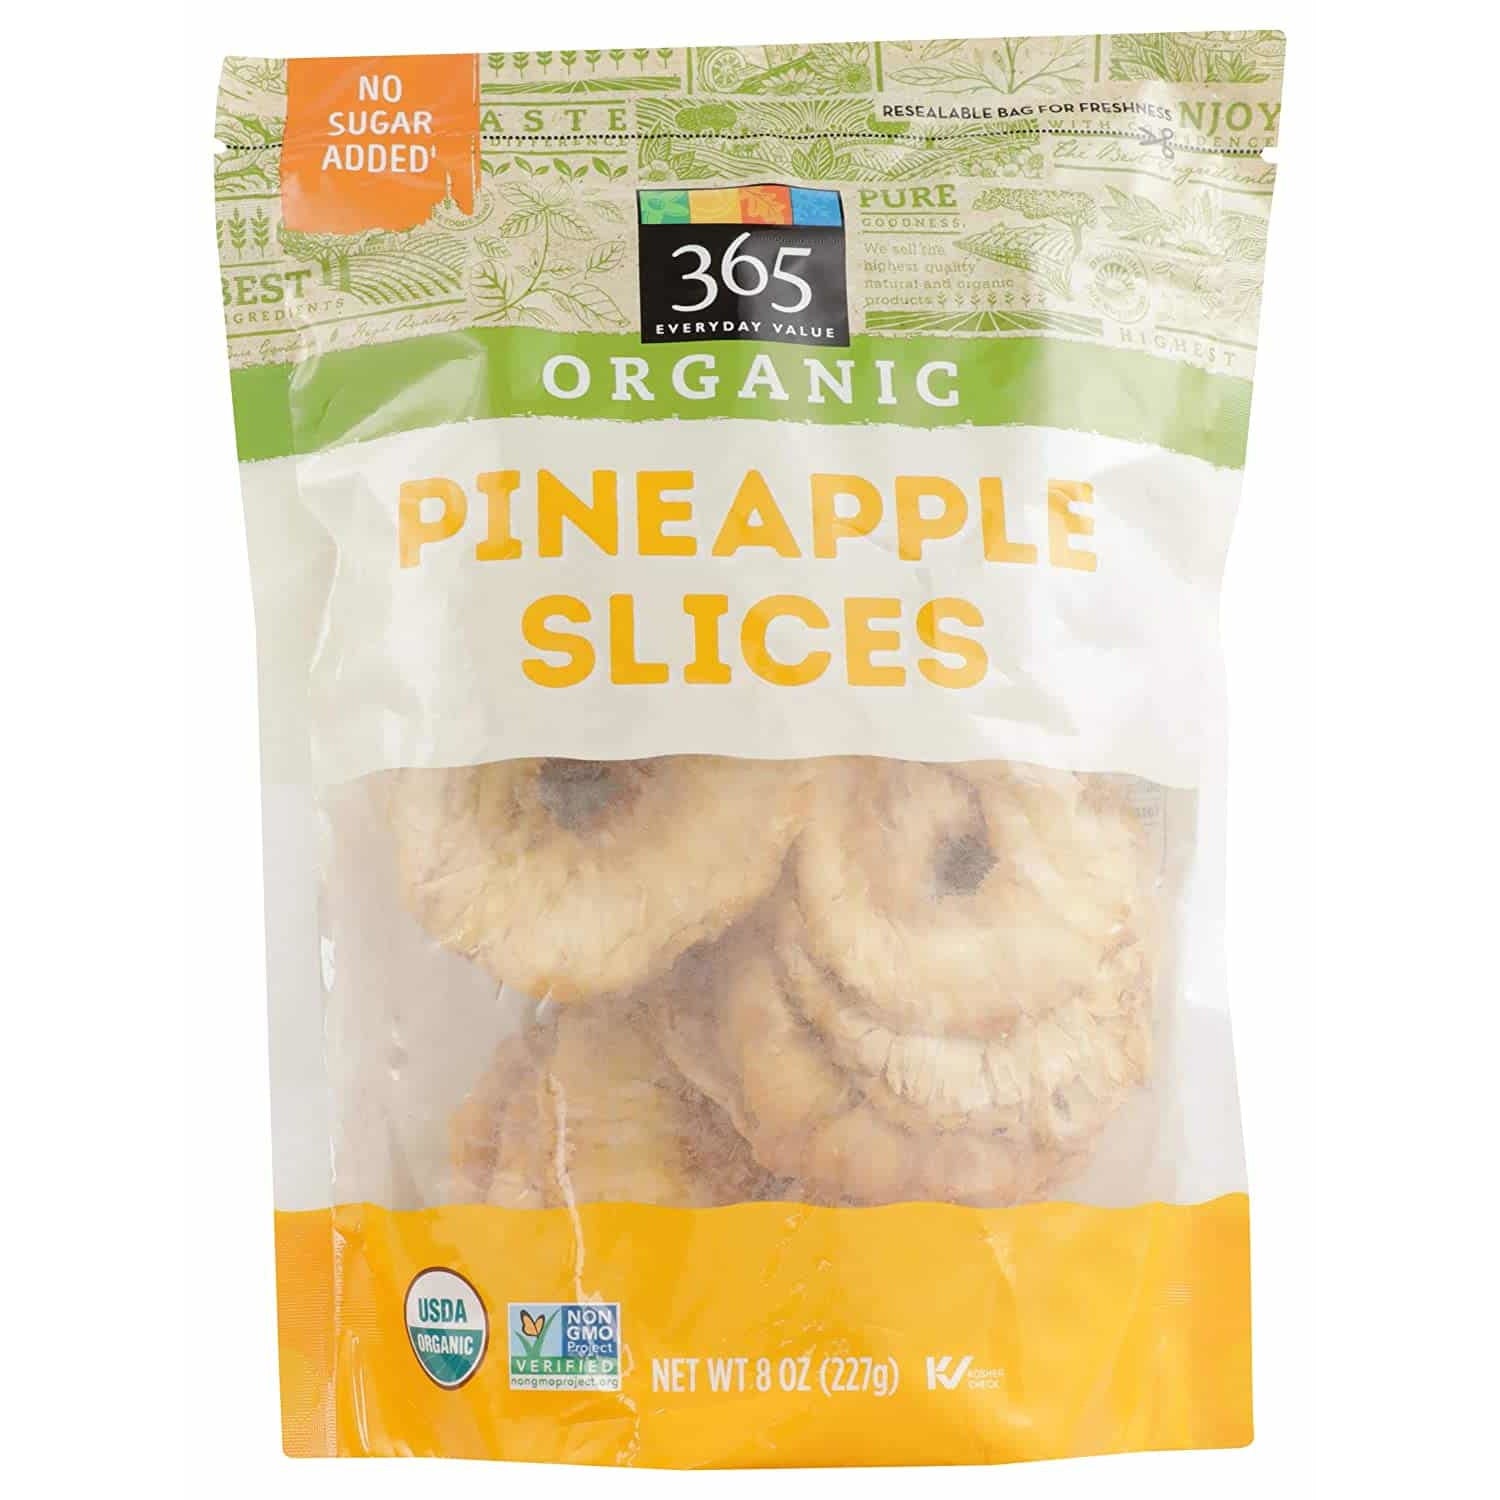 Organic Pineapple Slices, 8 oz